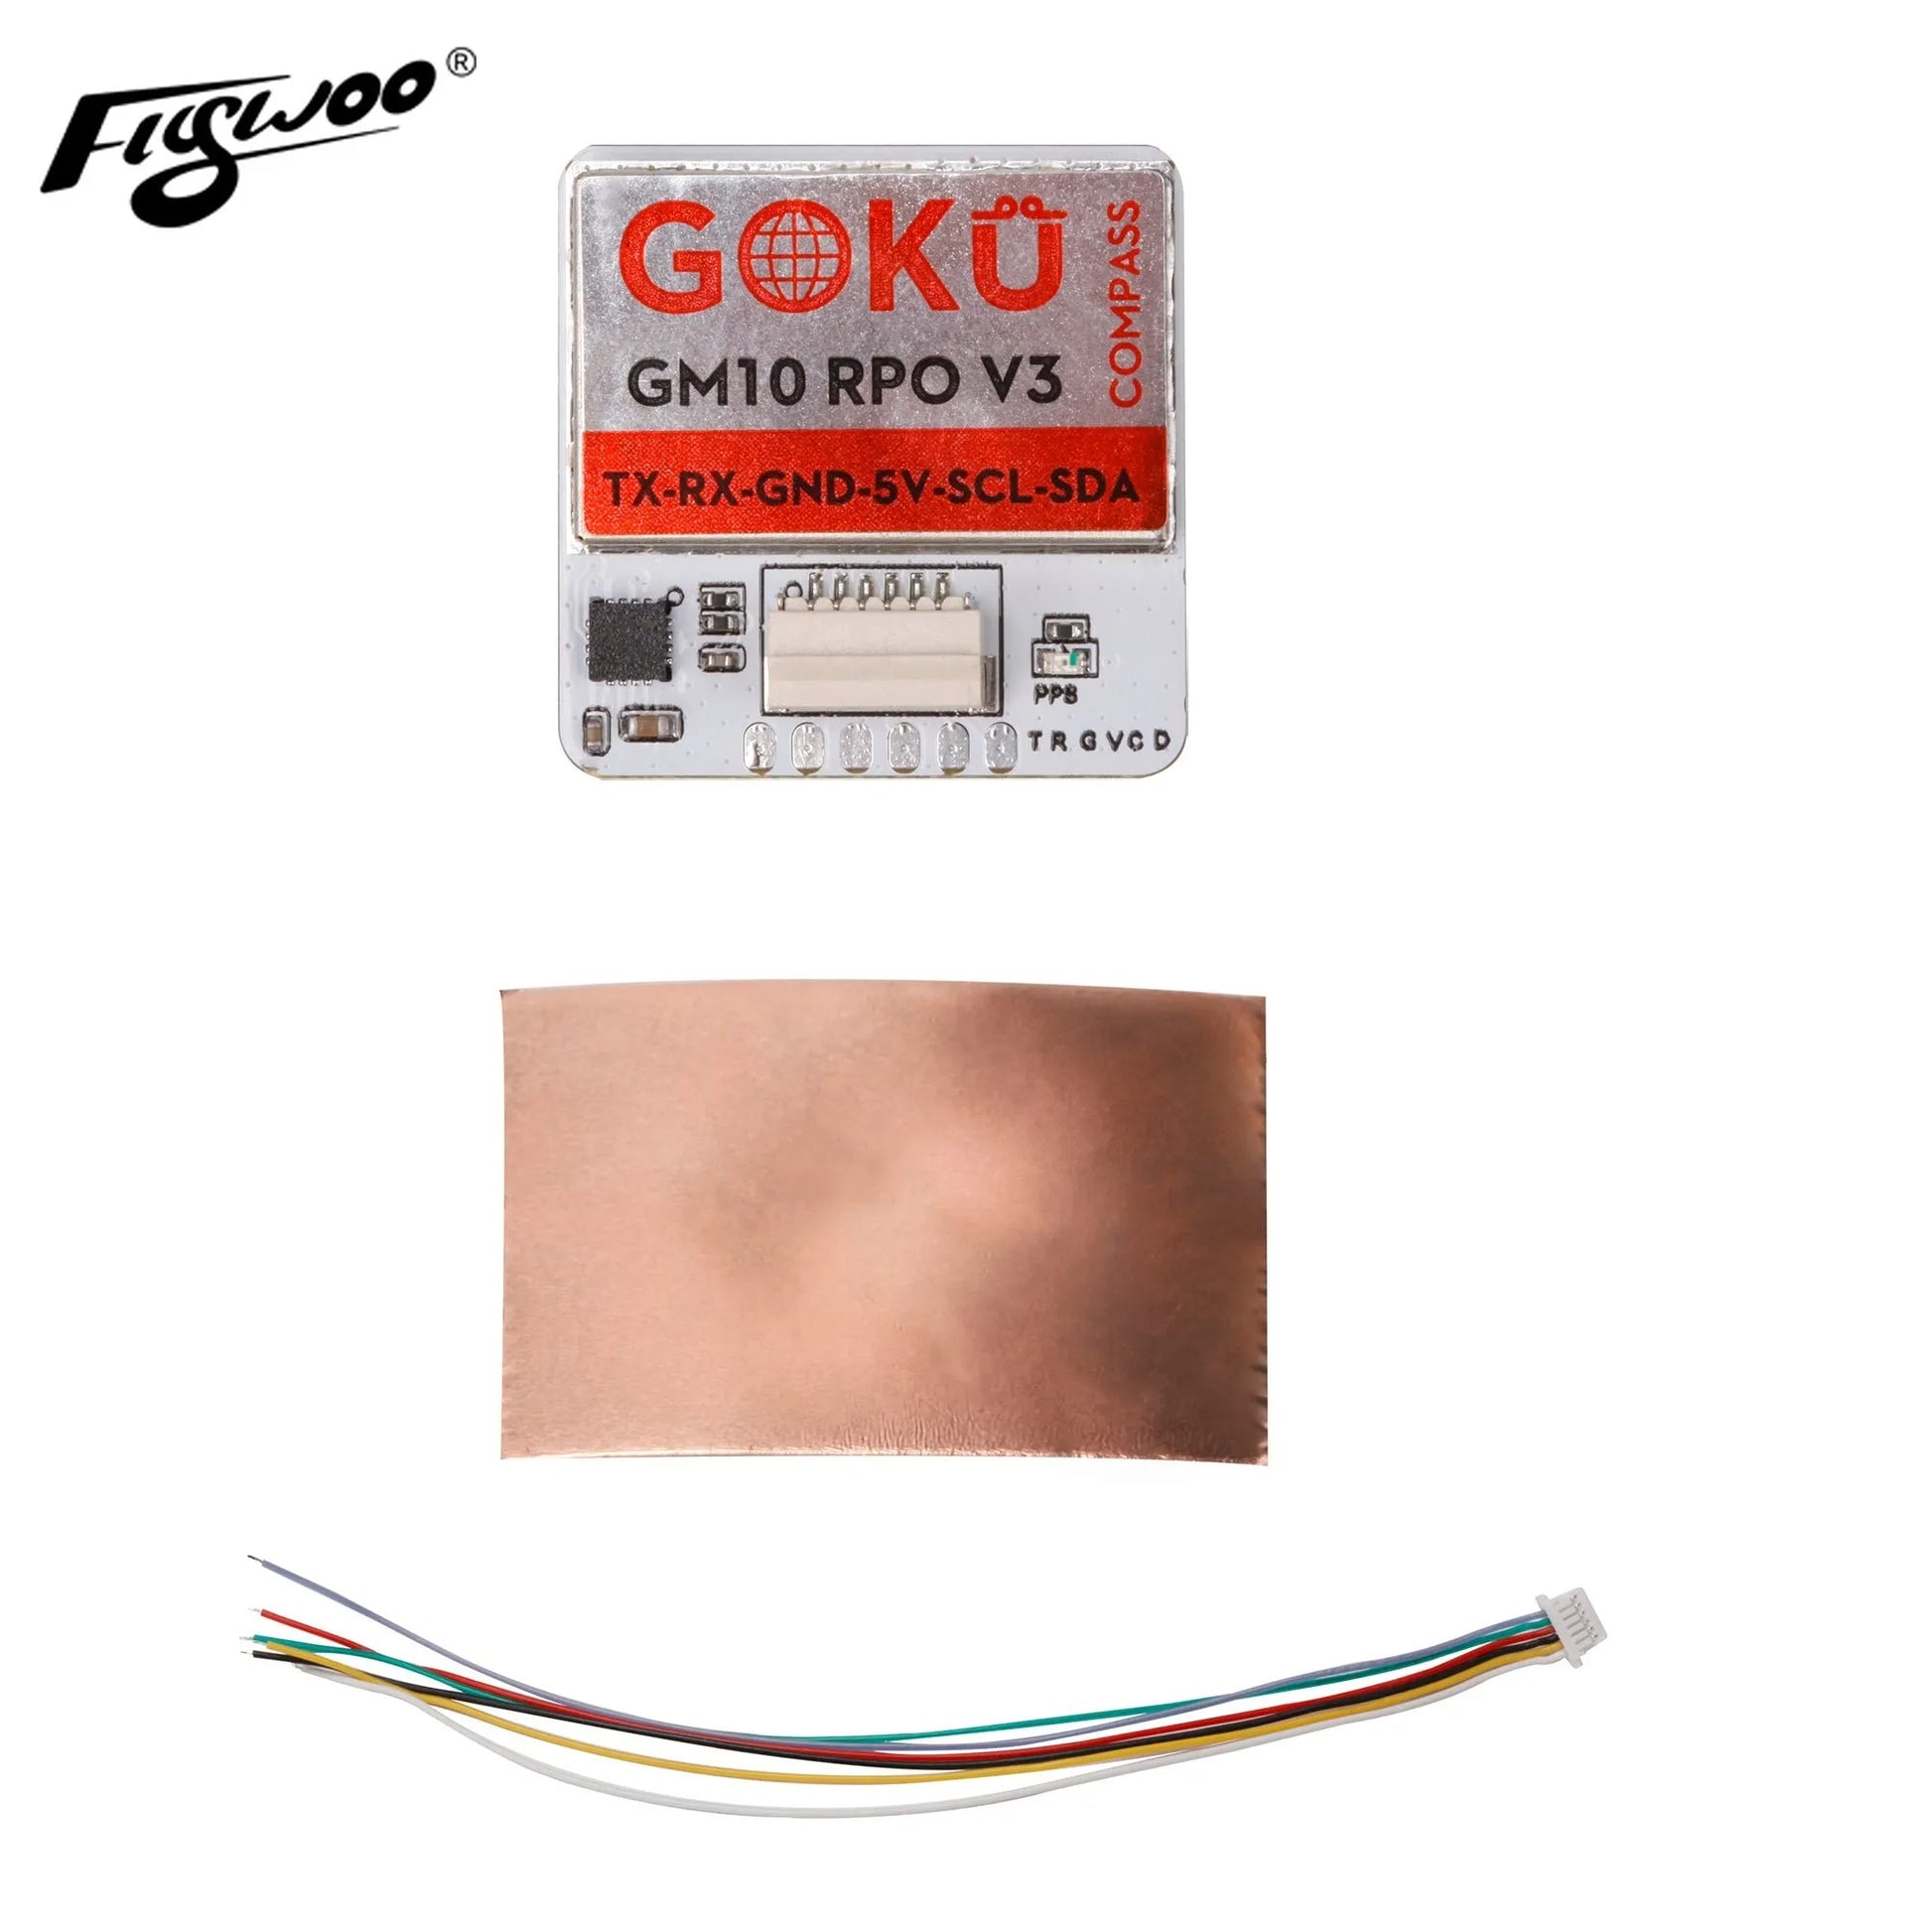 FLYWOO GOKU GM10 Pro V3 GPS w/compass